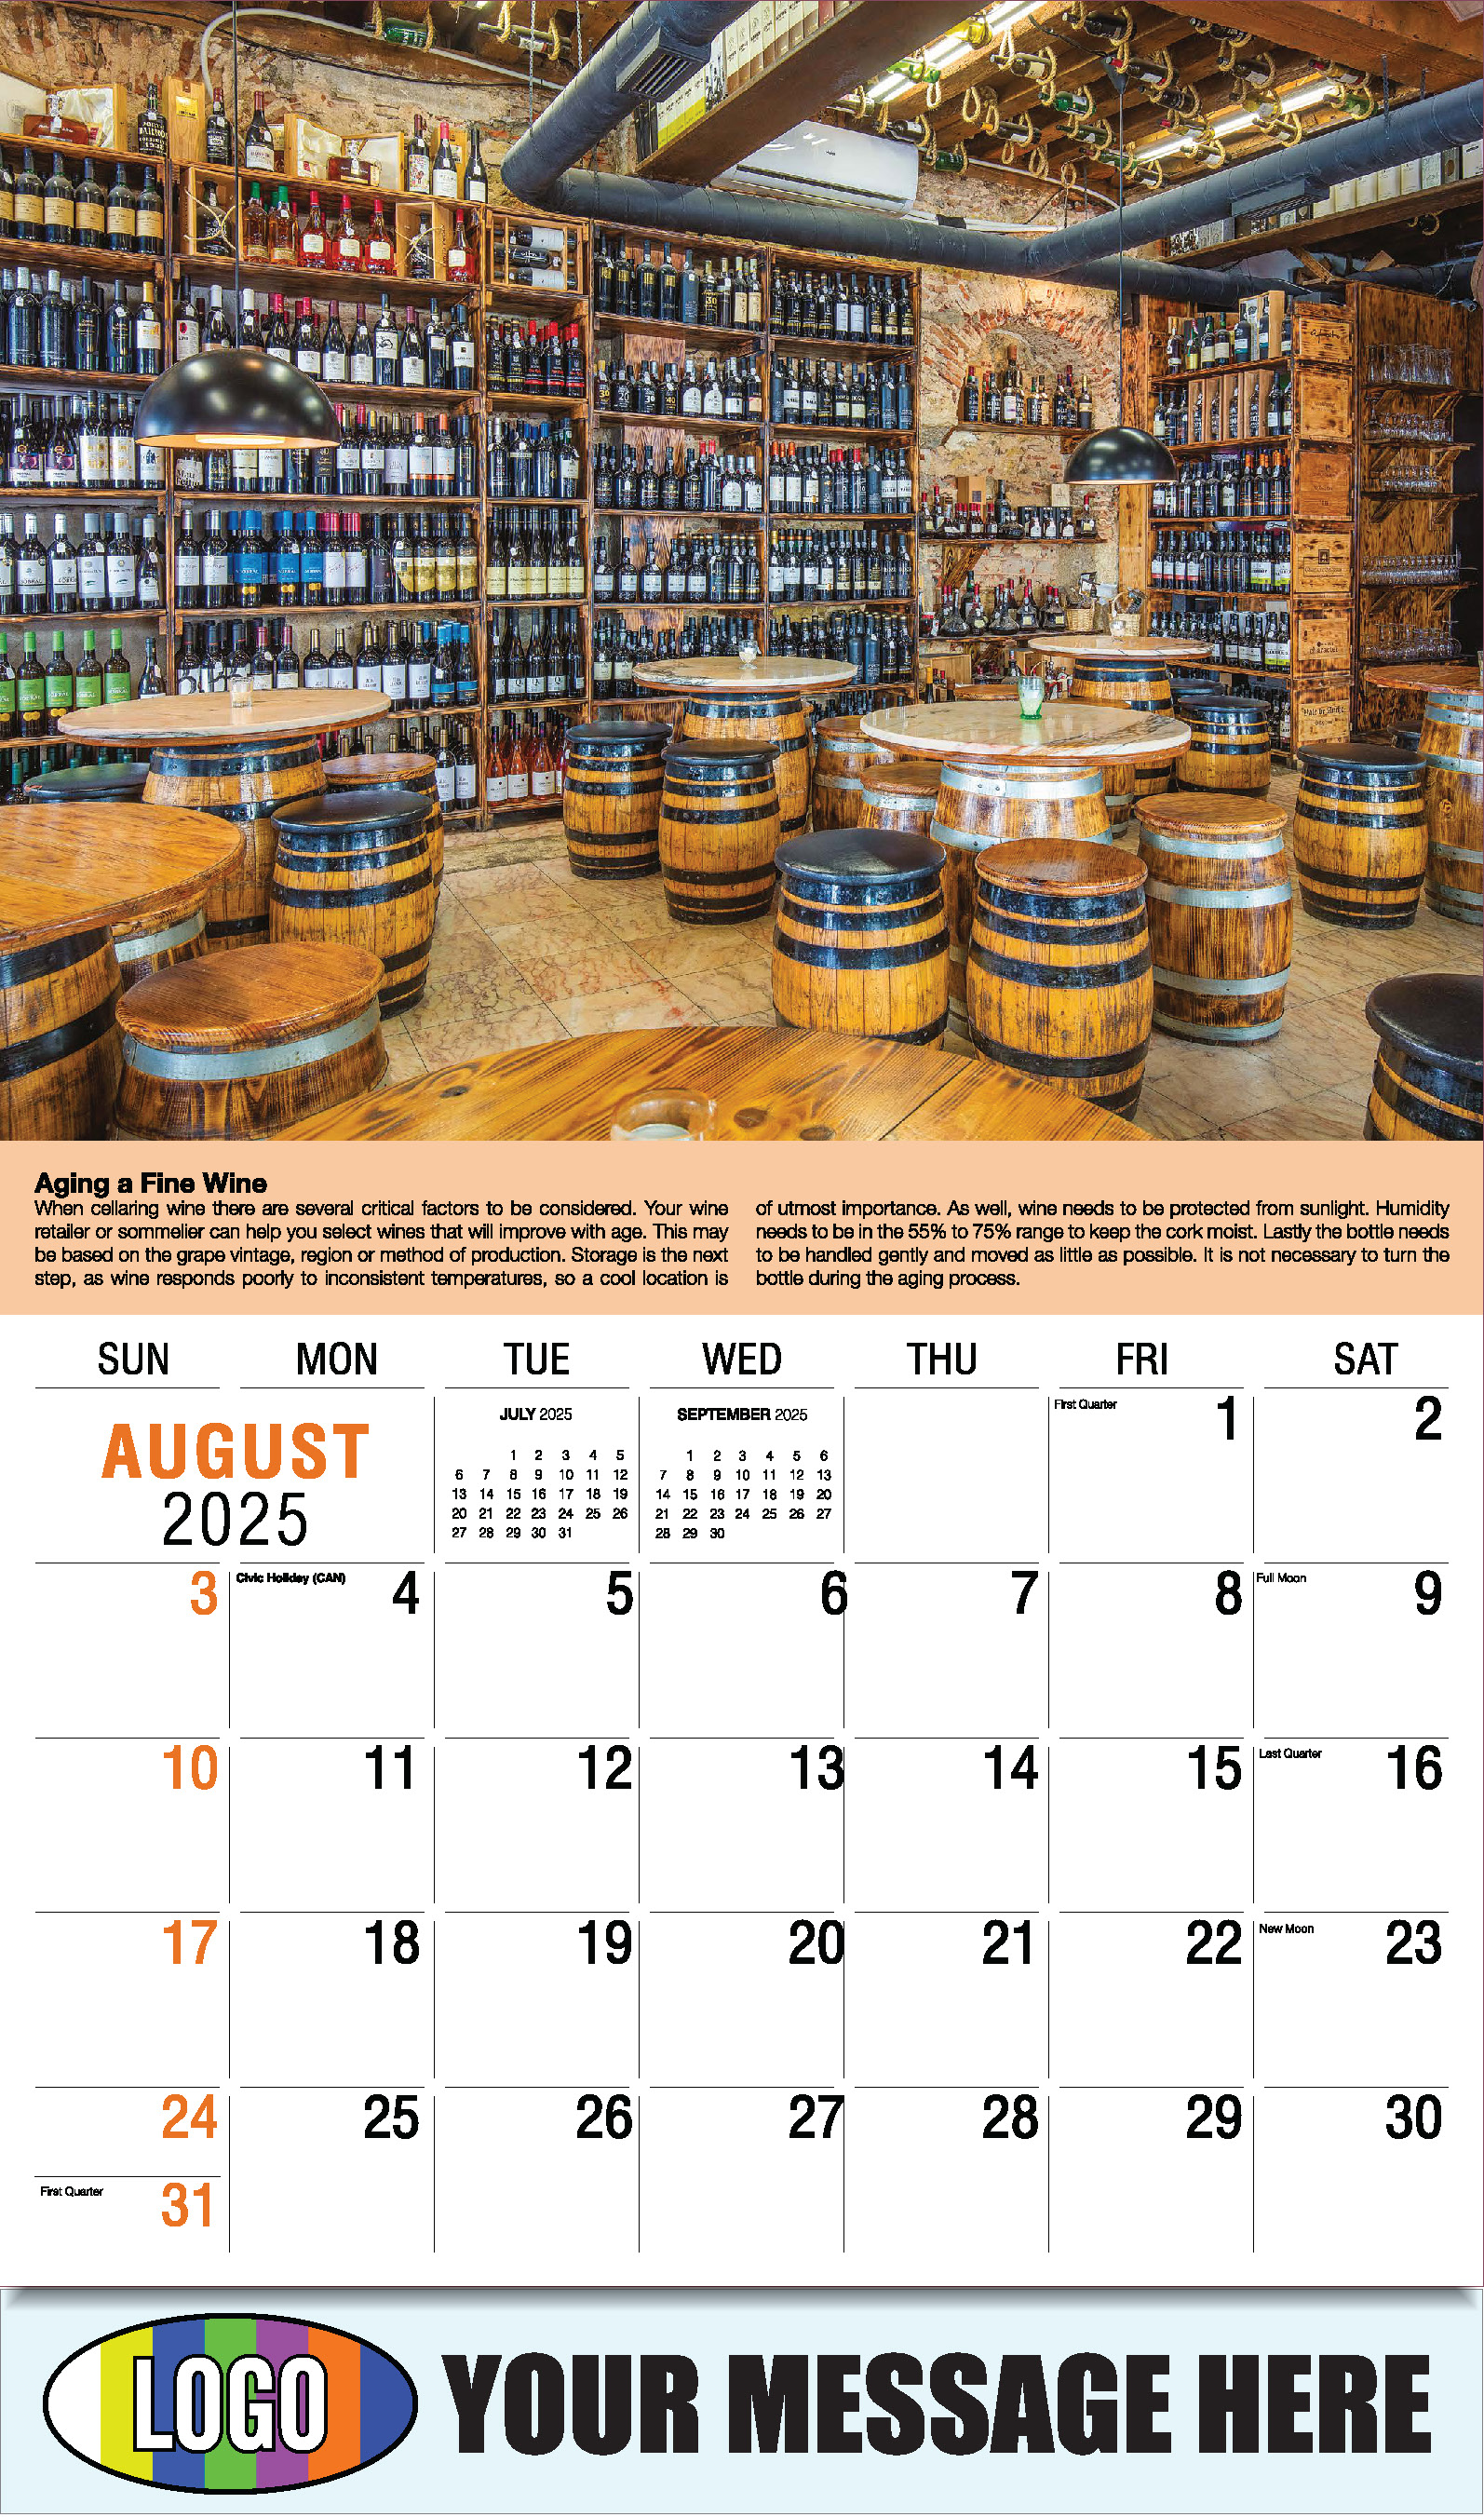 Vintages - Wine Tips 2025 Business Promo Calendar - August